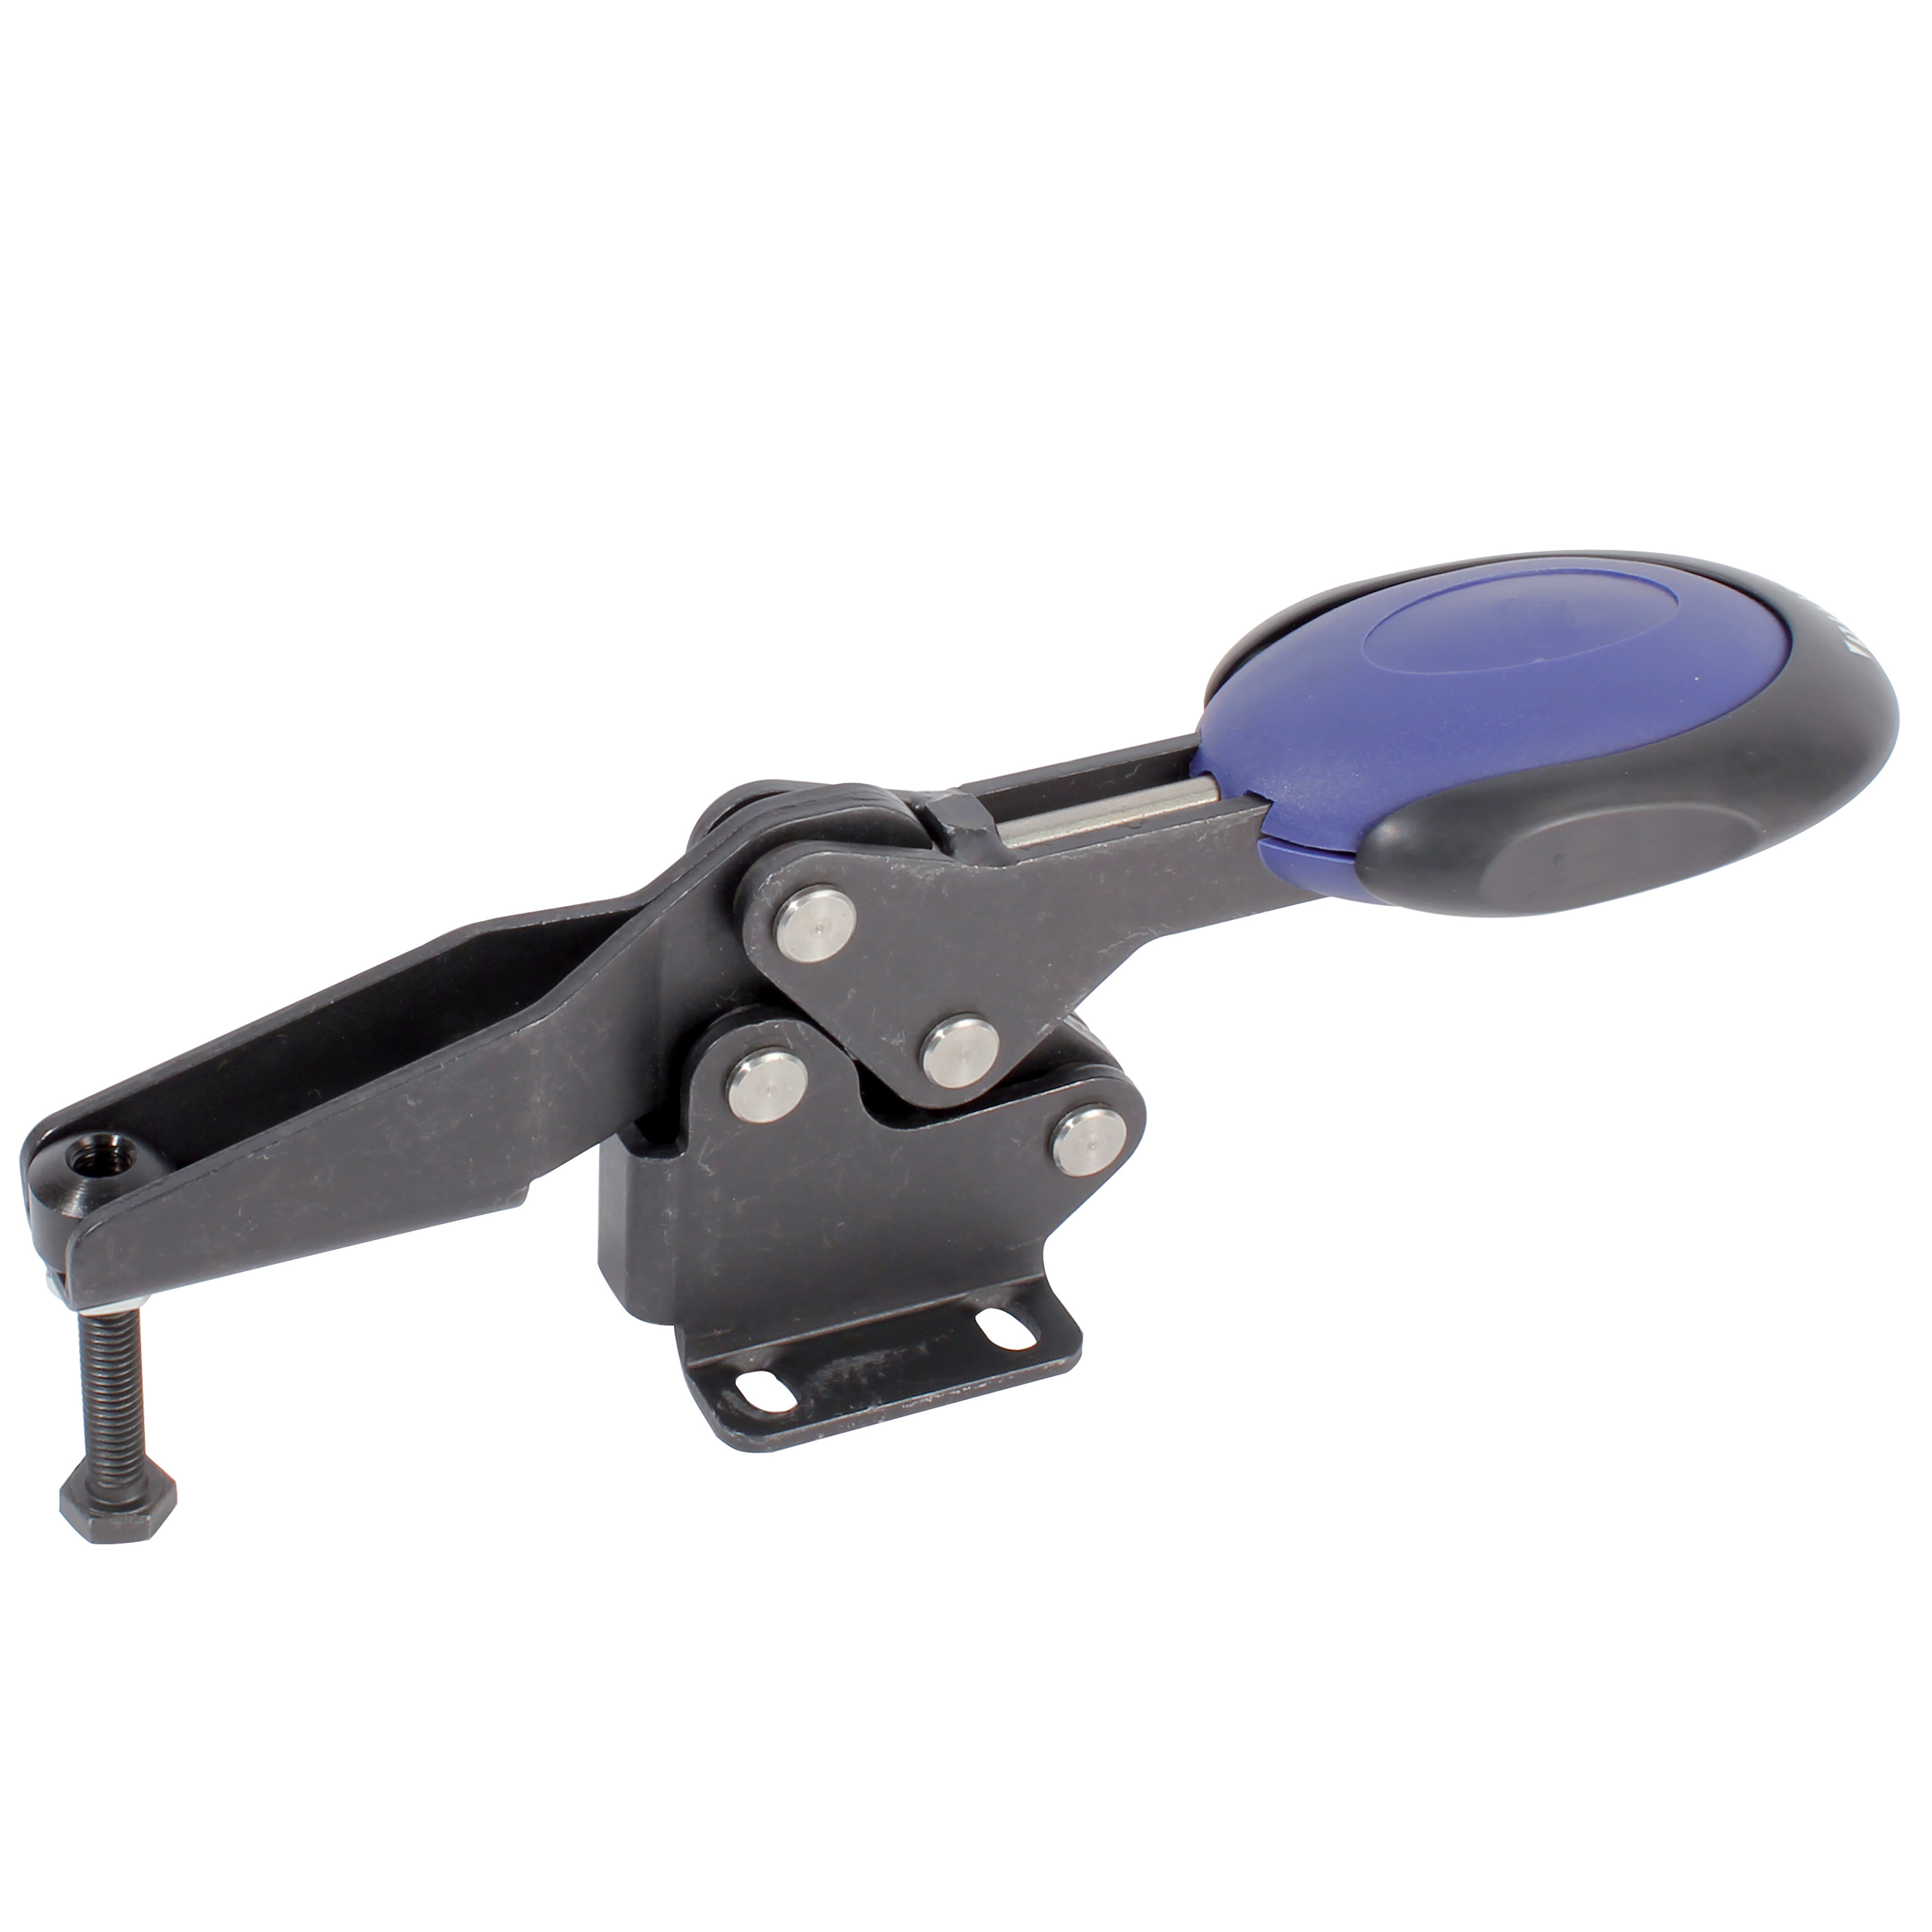 Horizontal toggle clamp - Horizontal toggle clamp / horizontal foot - Locking mechanism - 